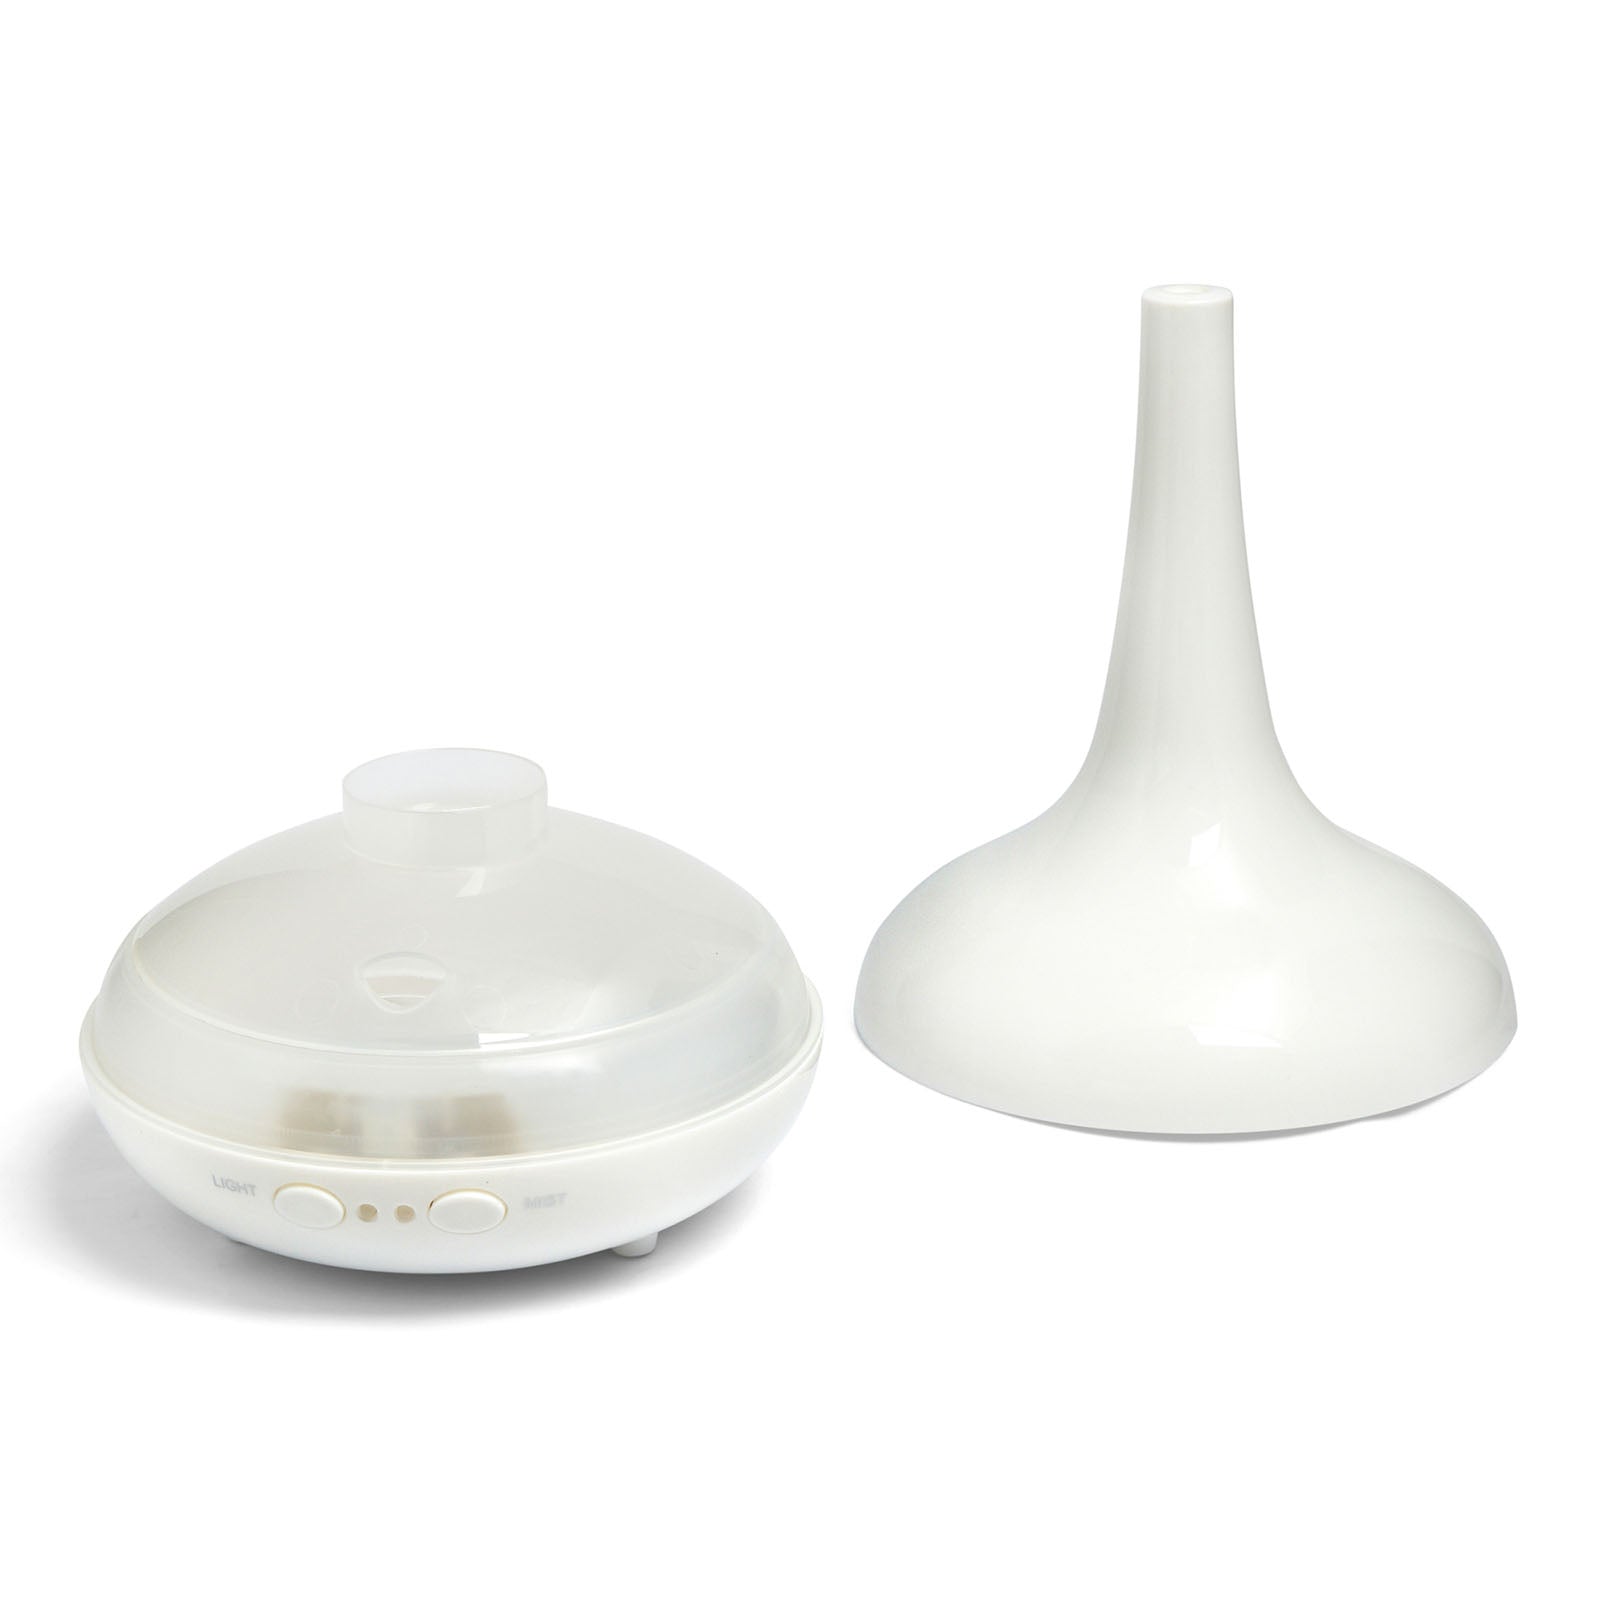 Essential Oil Diffuser Ultrasonic Humidifier Aromatherapy LED Light 200ML 3 Oils White 15 x 20cm - AULASH